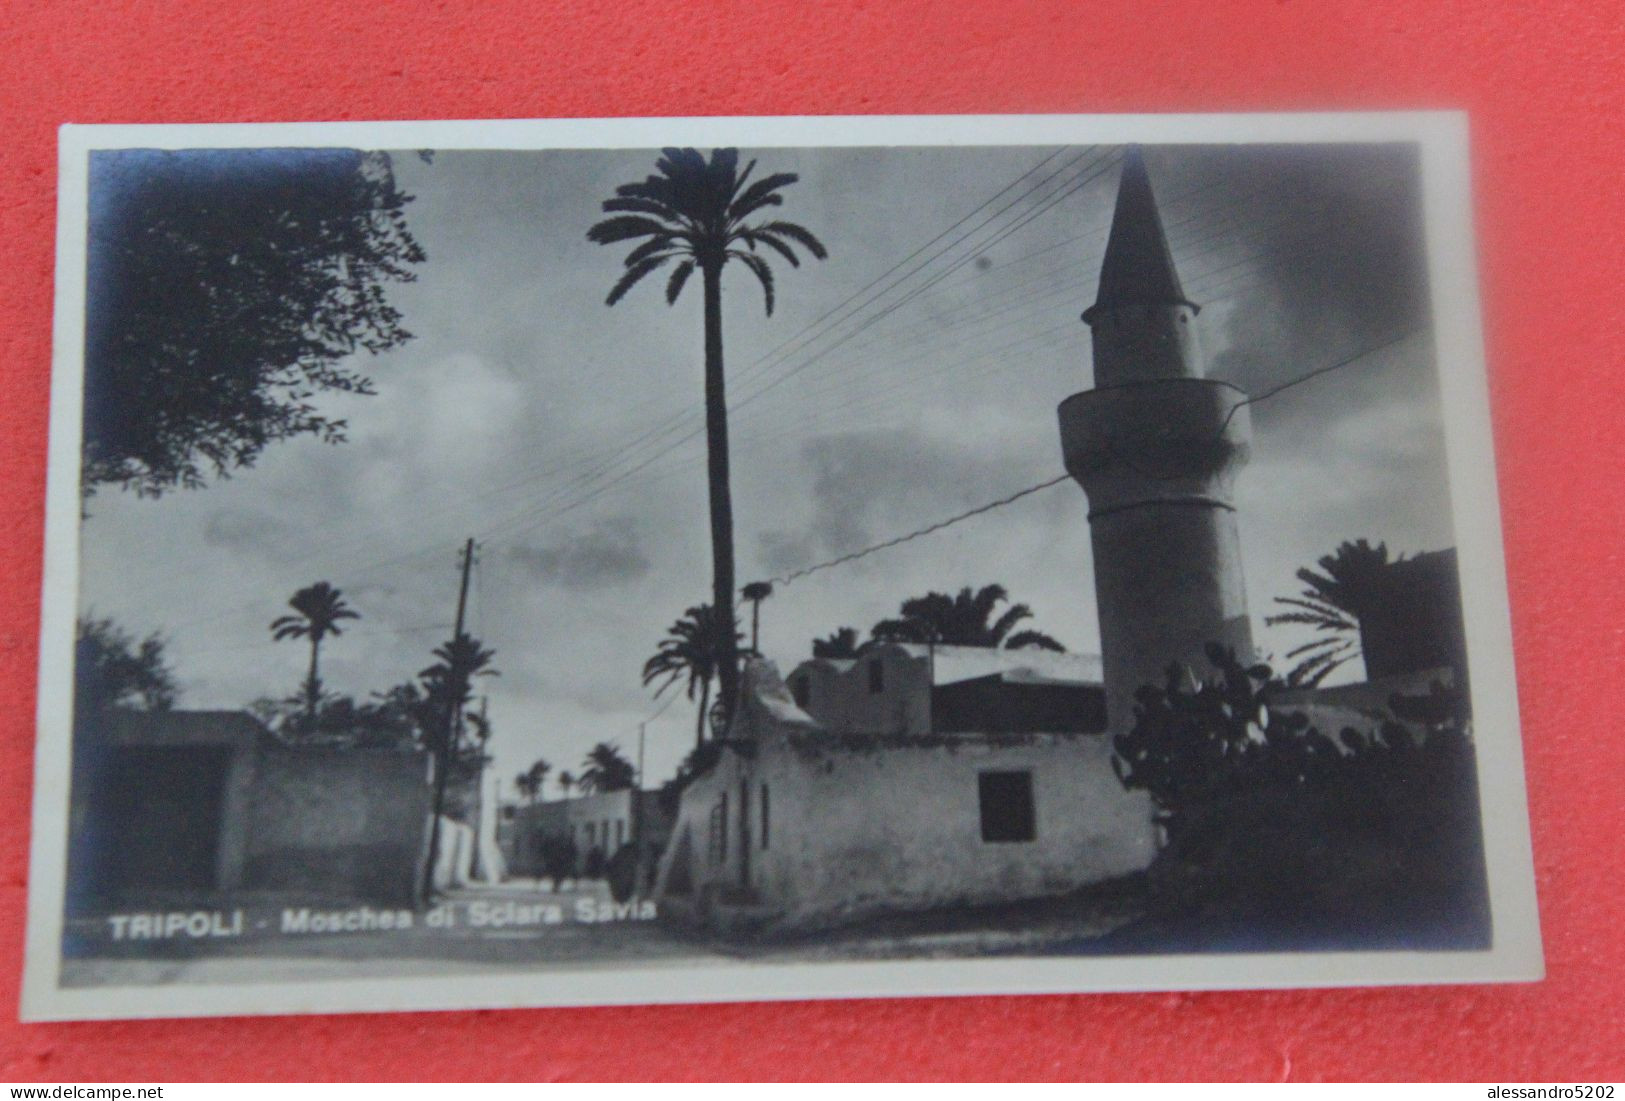 Libya Tripoli Moschea Sciara Savia Ed. Haggiag NV - Libië